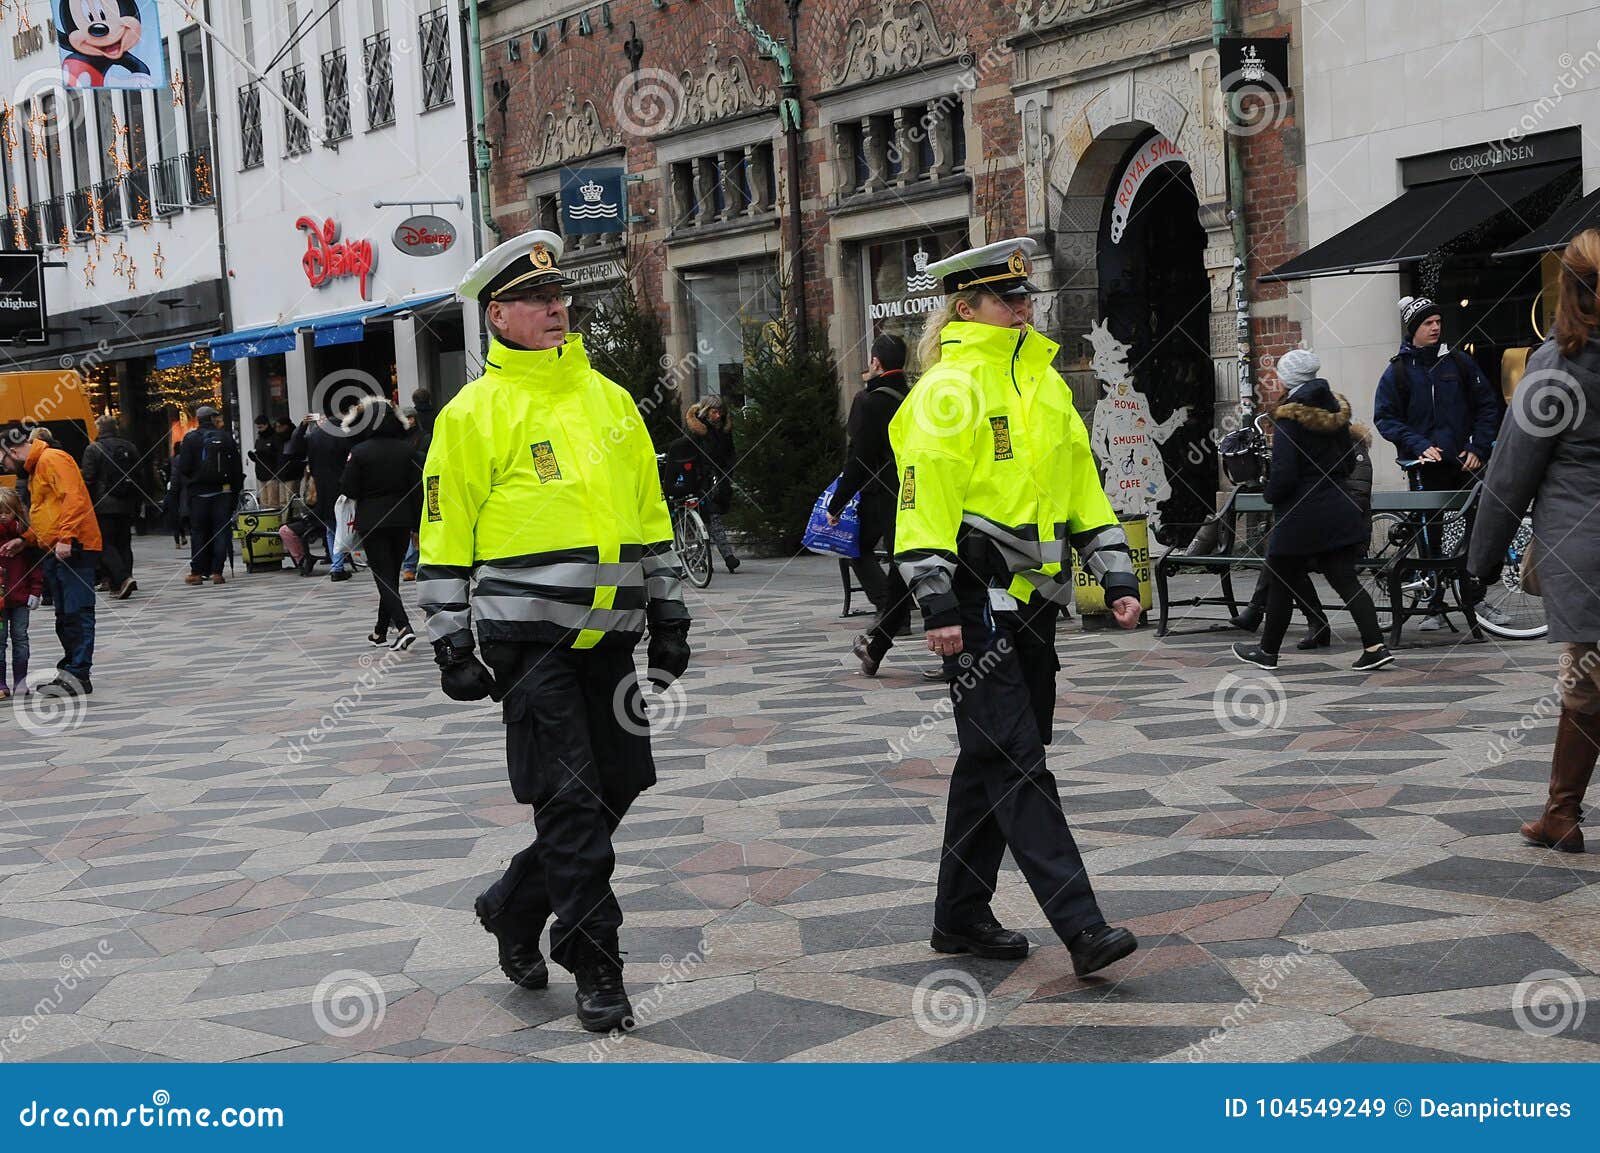 Stock black, on STROEGET COPENHAGEN - Image DANISH PATROL 104549249 Editorial police: POLICE Image of